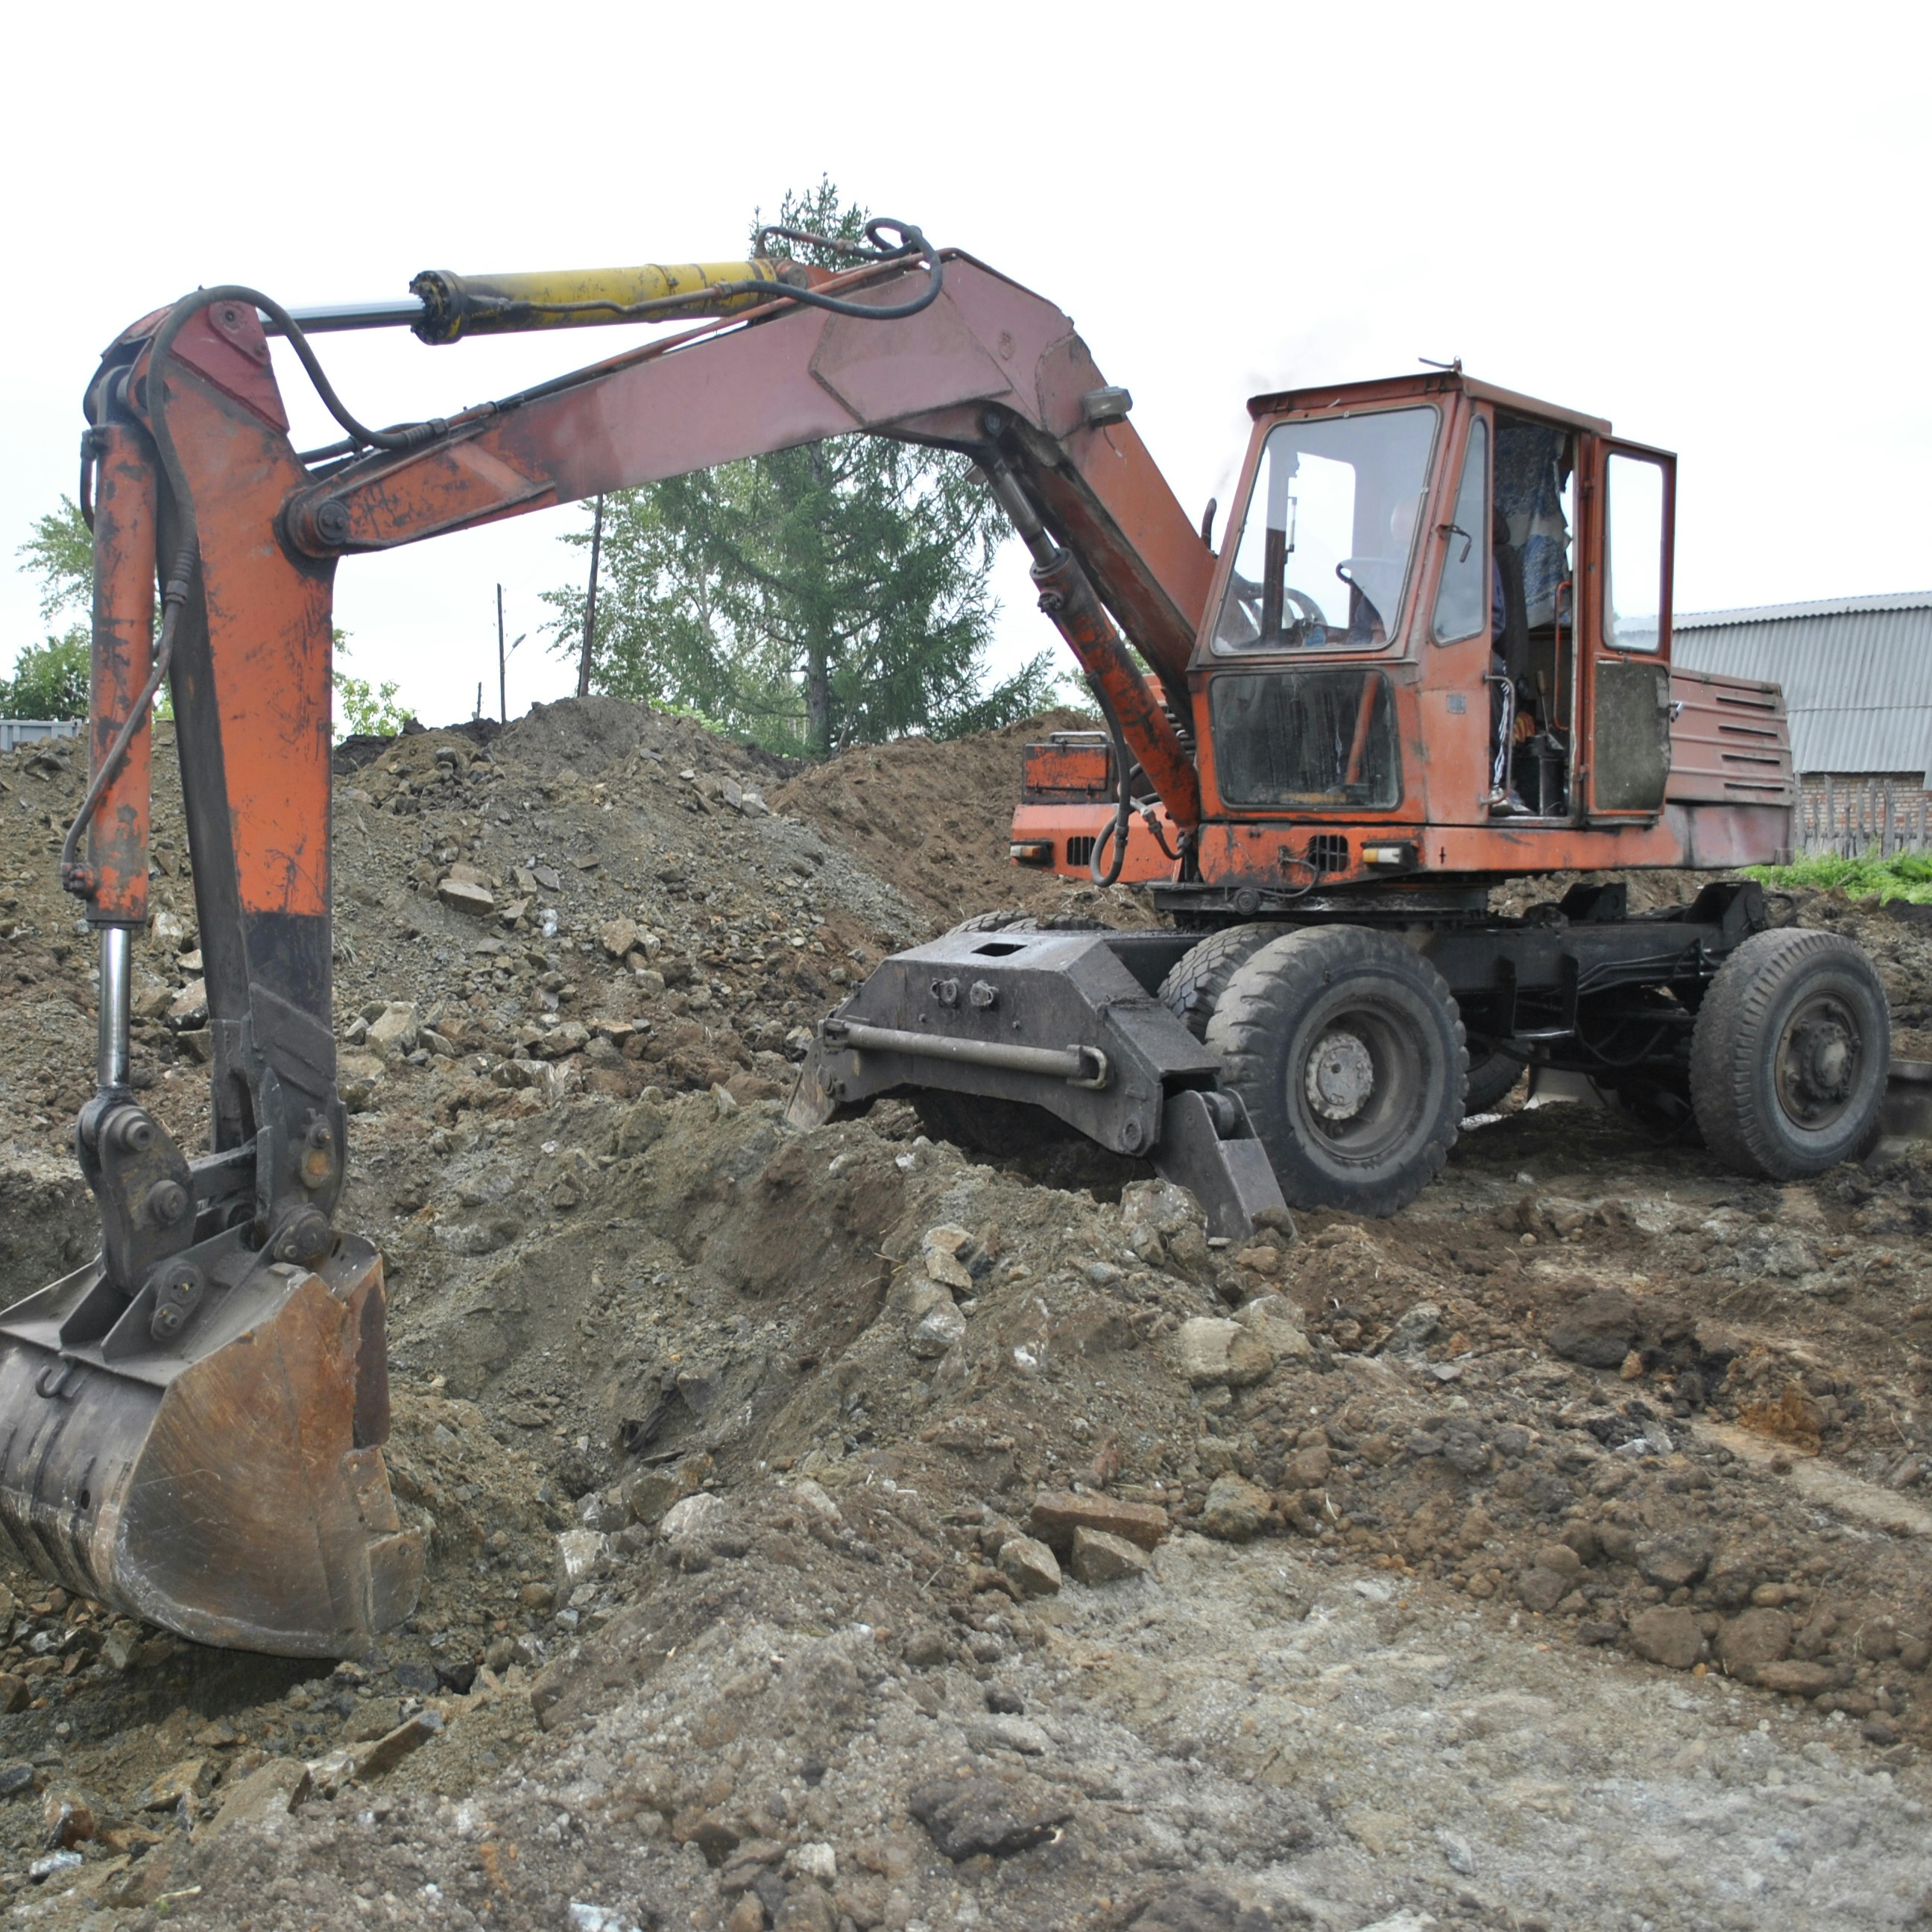 an orange and black bulldozer digging a pile of dirt